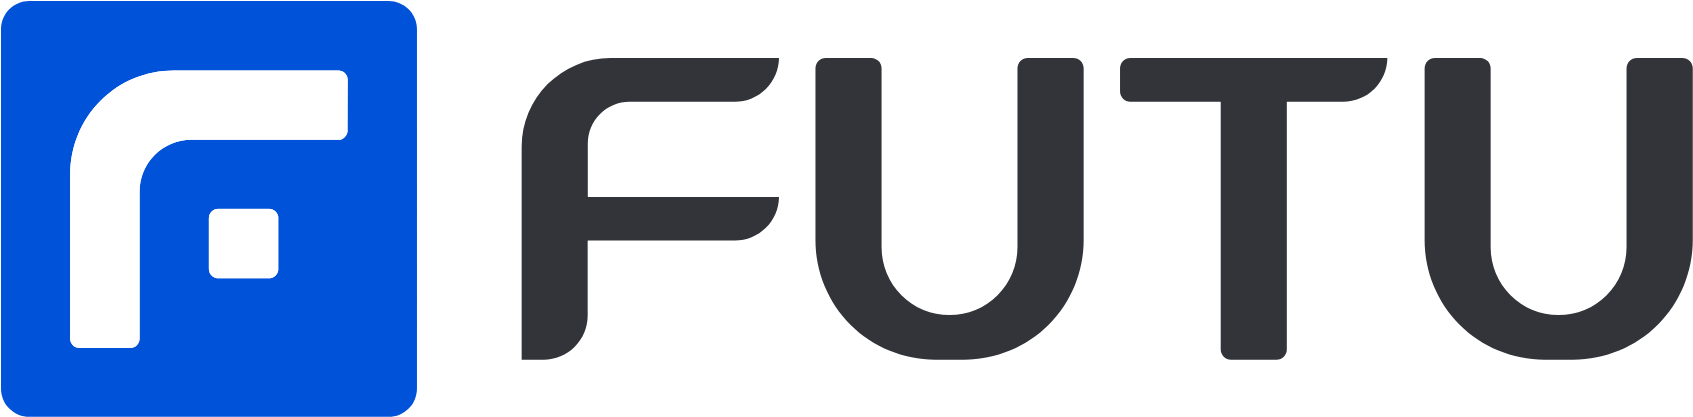 Futu Holdings logo large (transparent PNG)